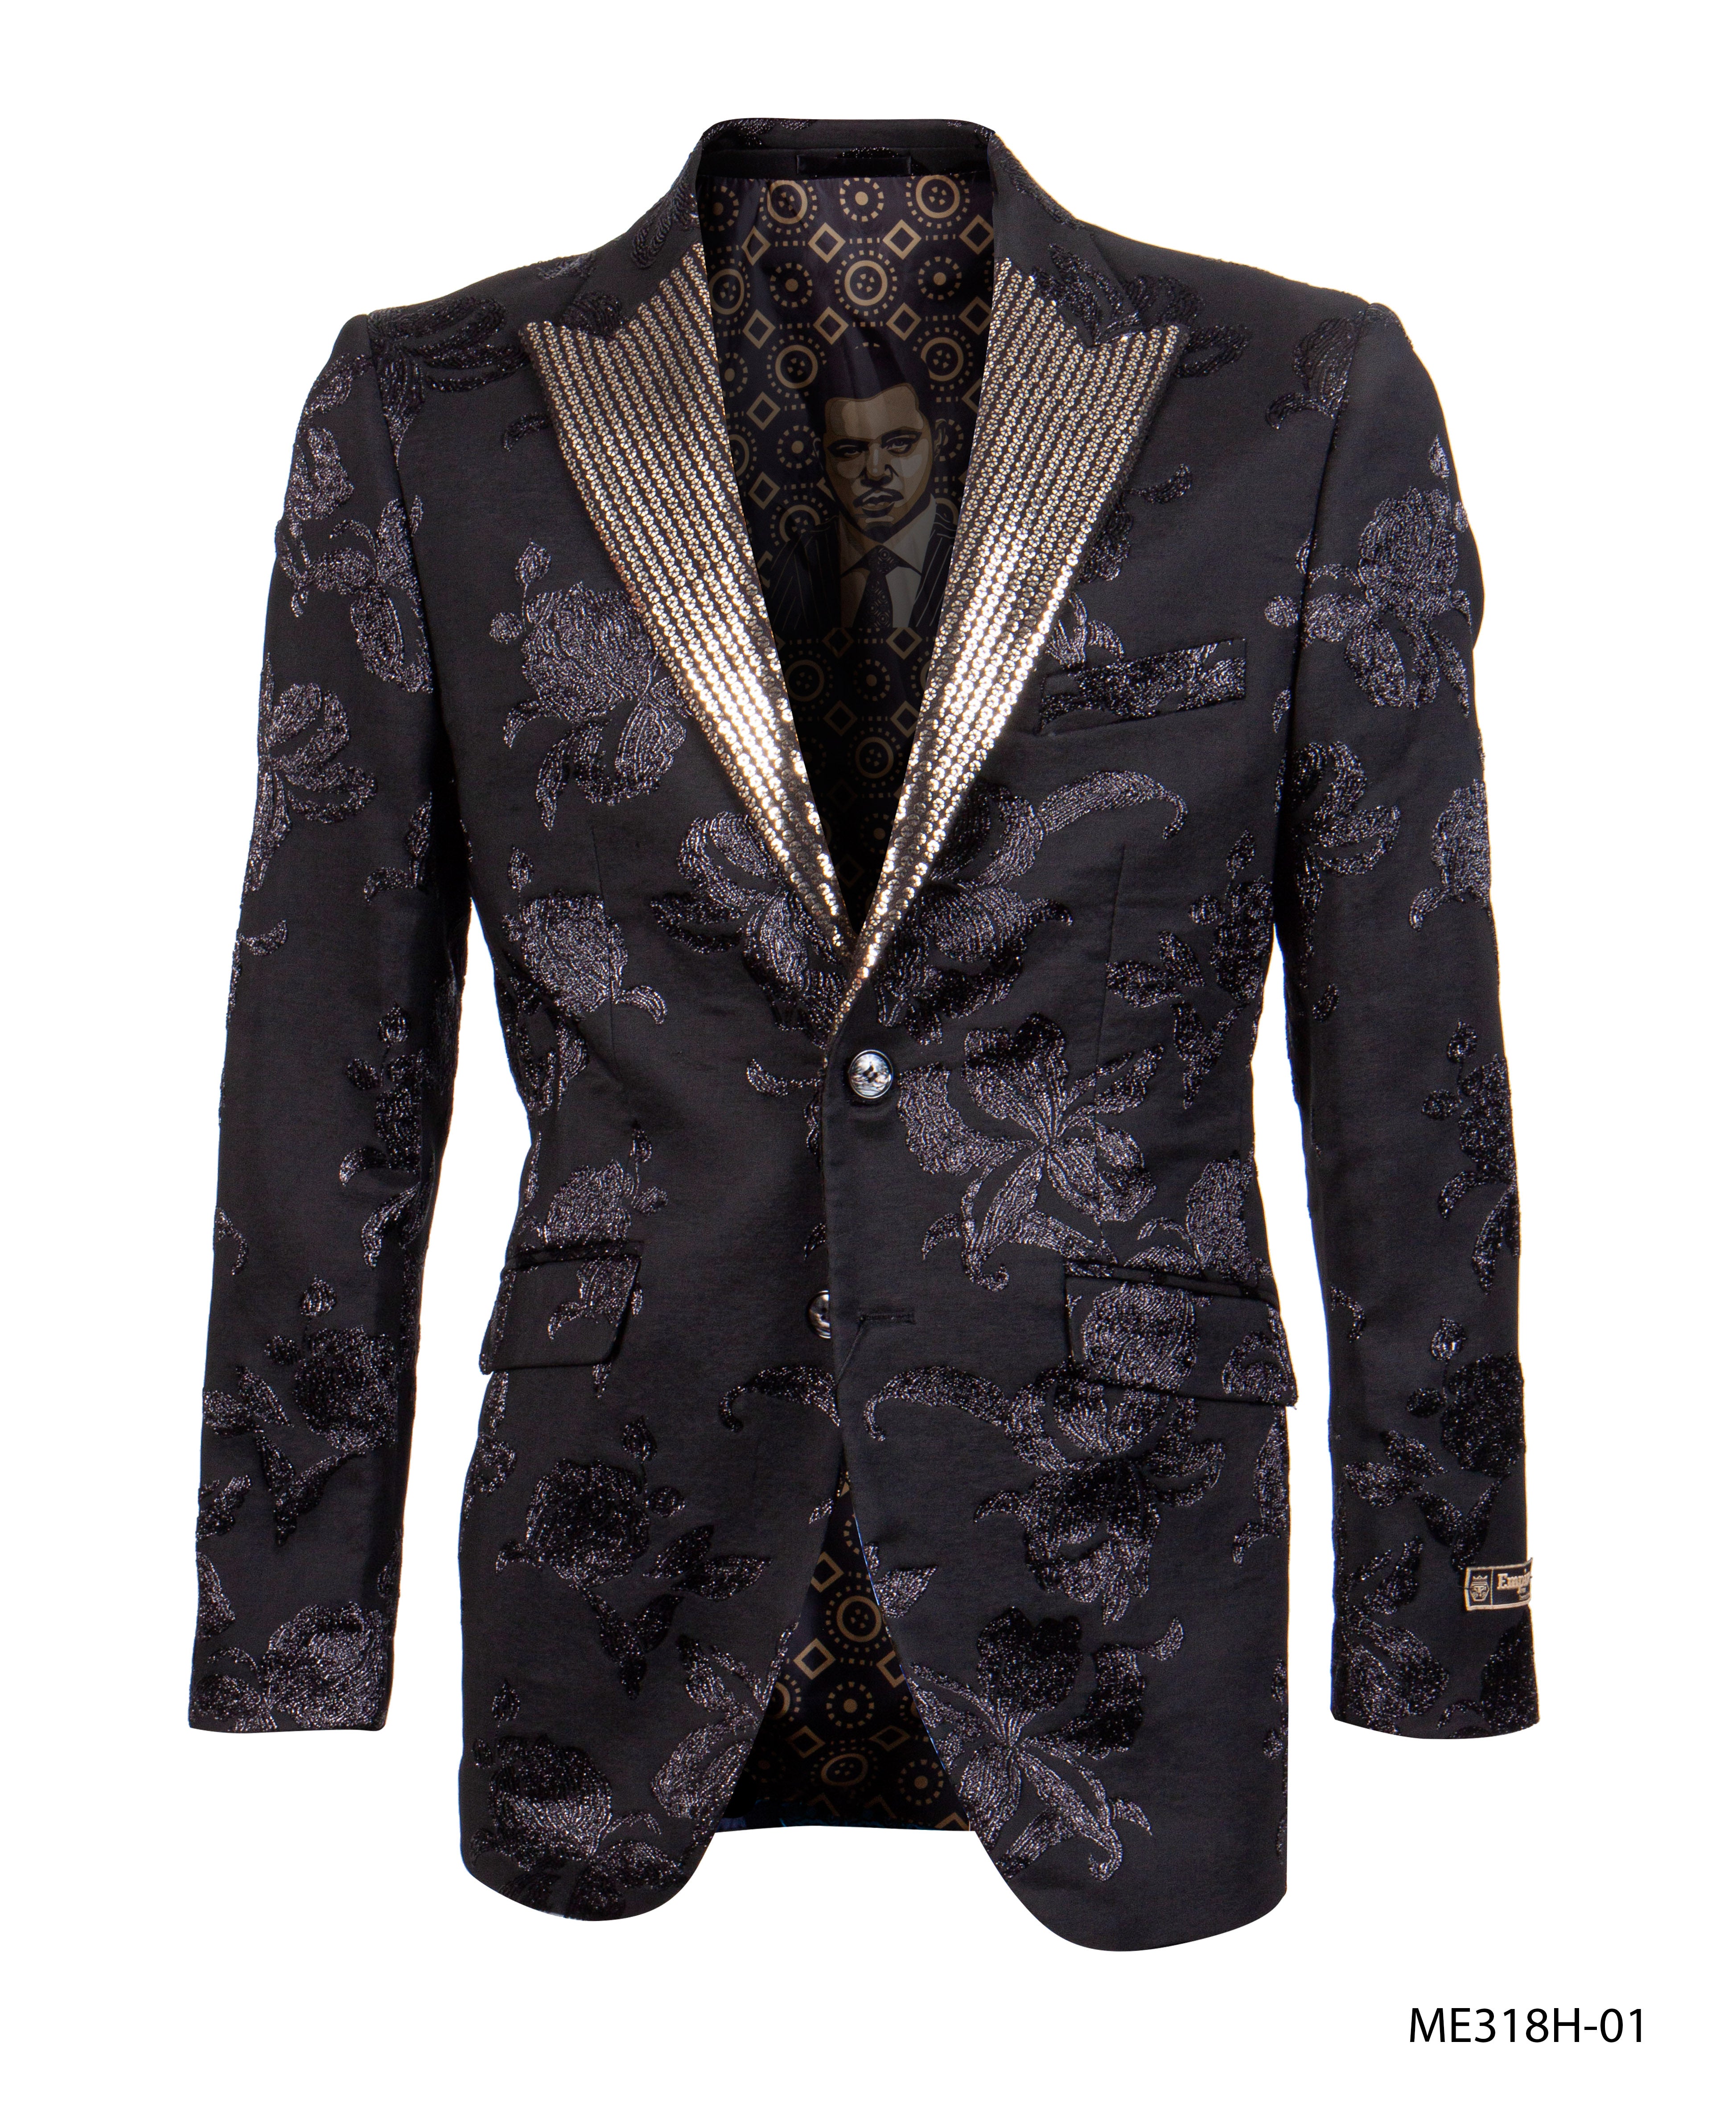 Black/Gold Empire Show Blazers Formal Dinner Suit Jackets For Men ME318H-01